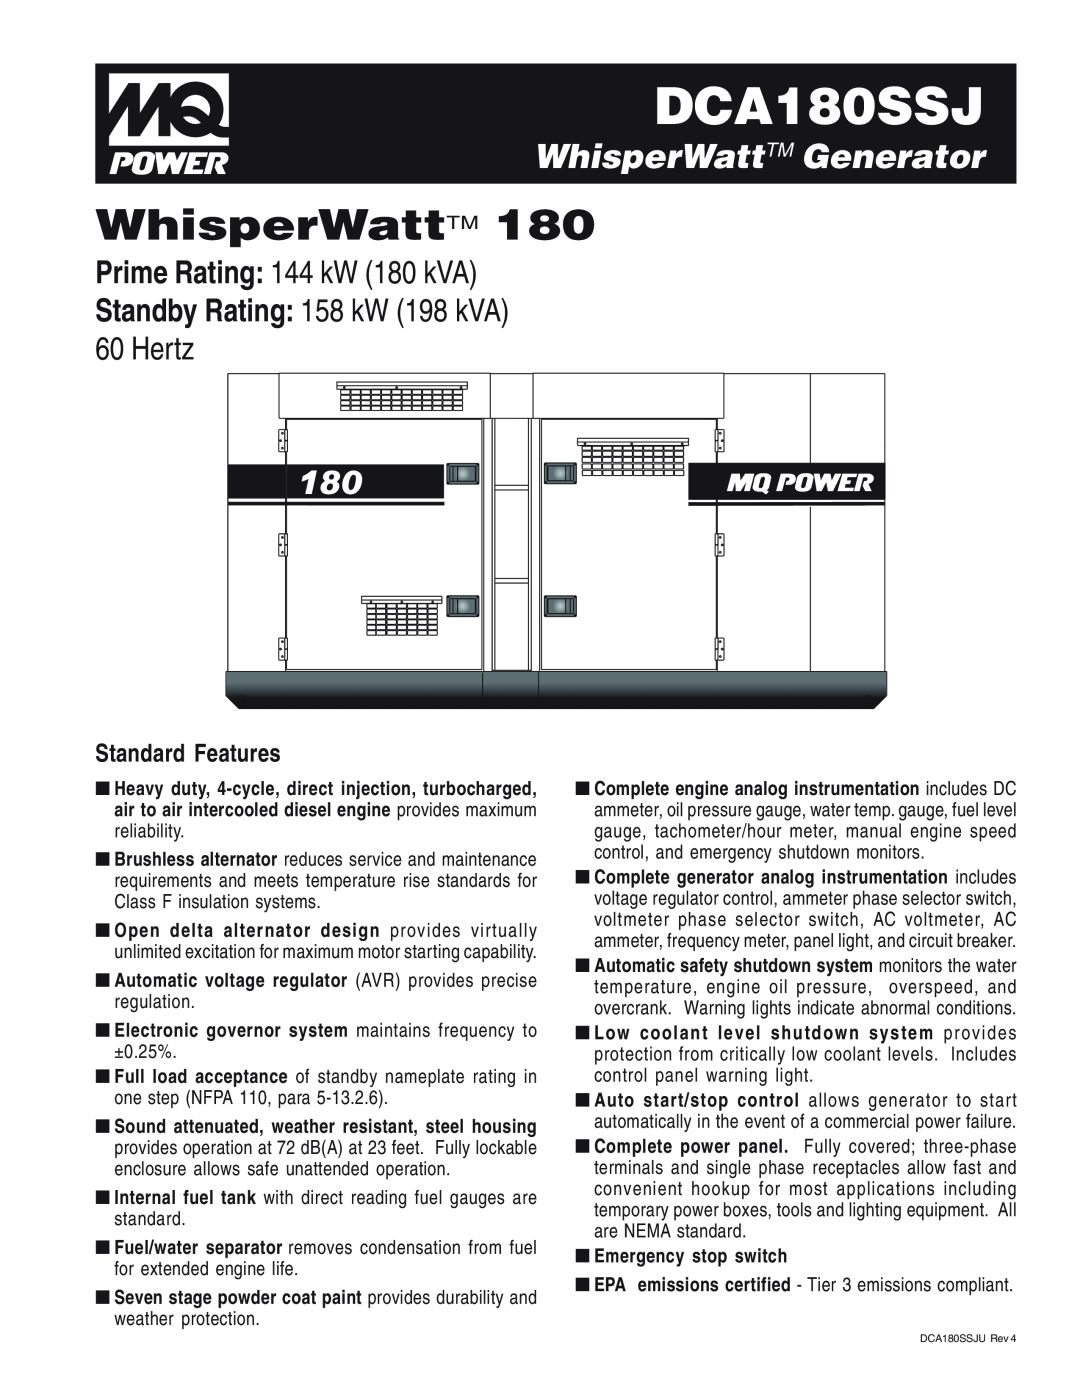 Multiquip DCA180SSJ manual WhisperWattTM Generator, Standard Features, Prime Rating 144 kW 180 kVA, Hertz 